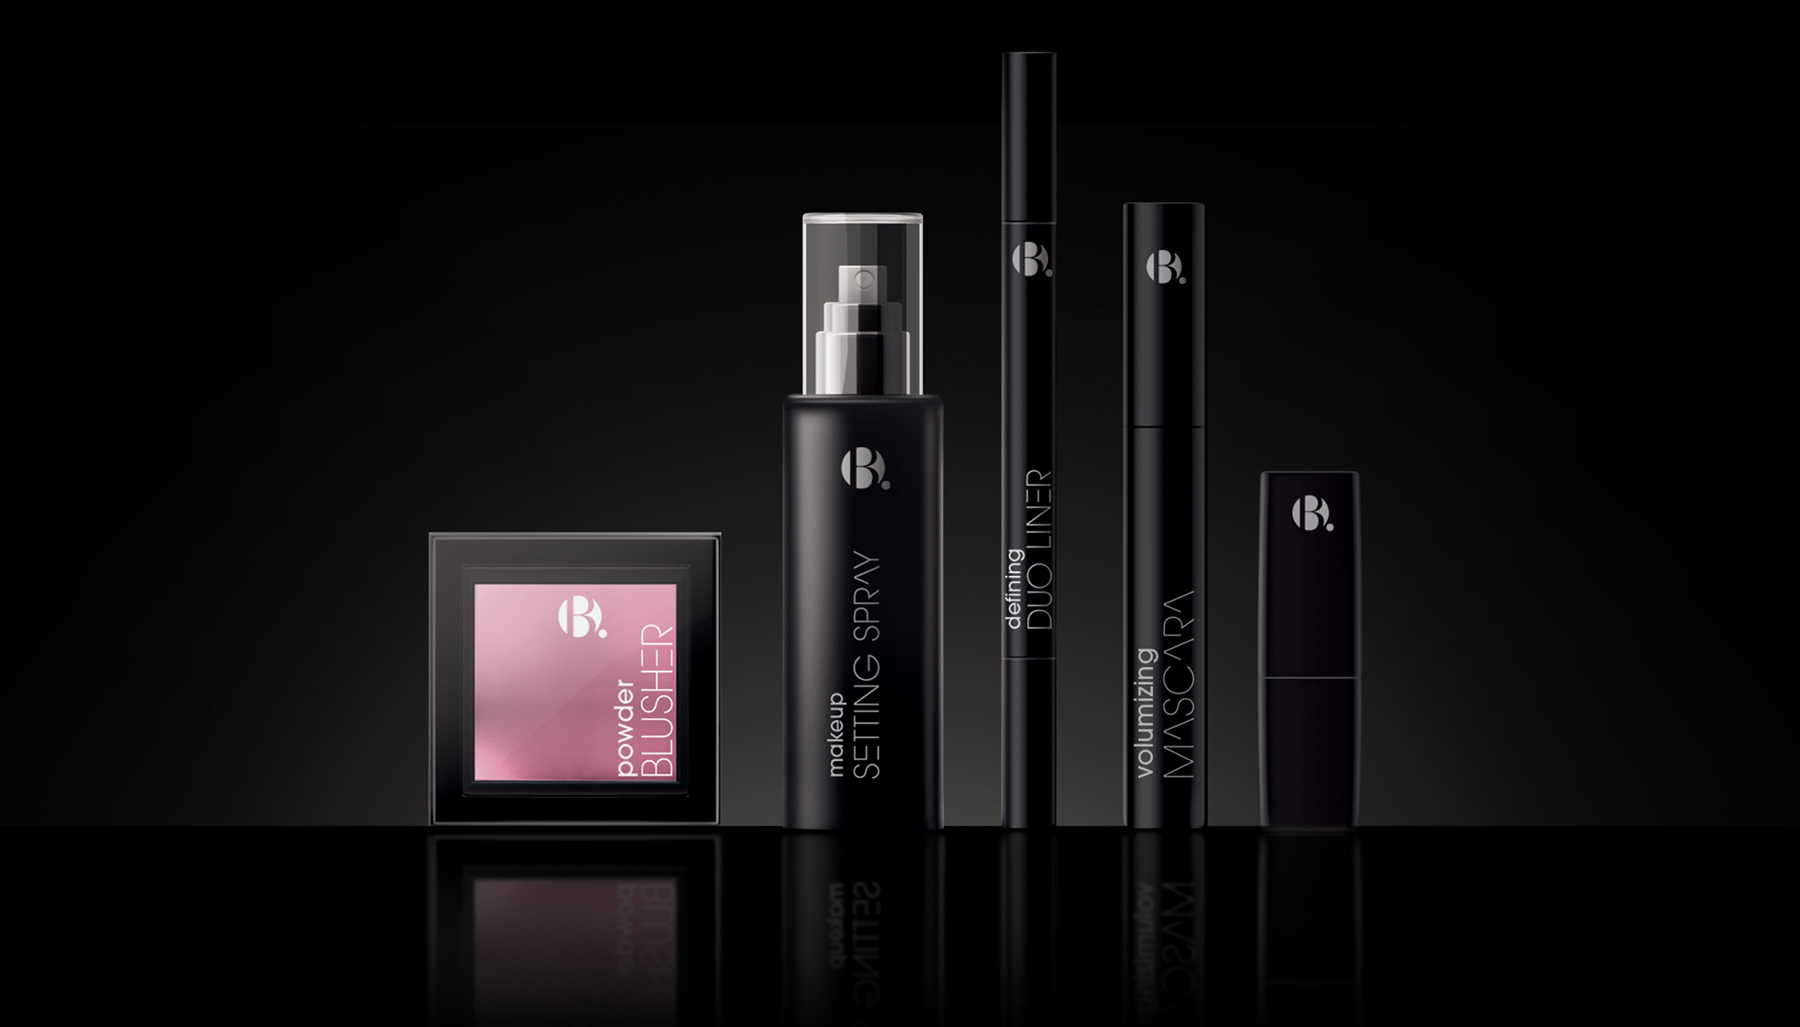 B. cosmetic product range branded by Biles Hendry